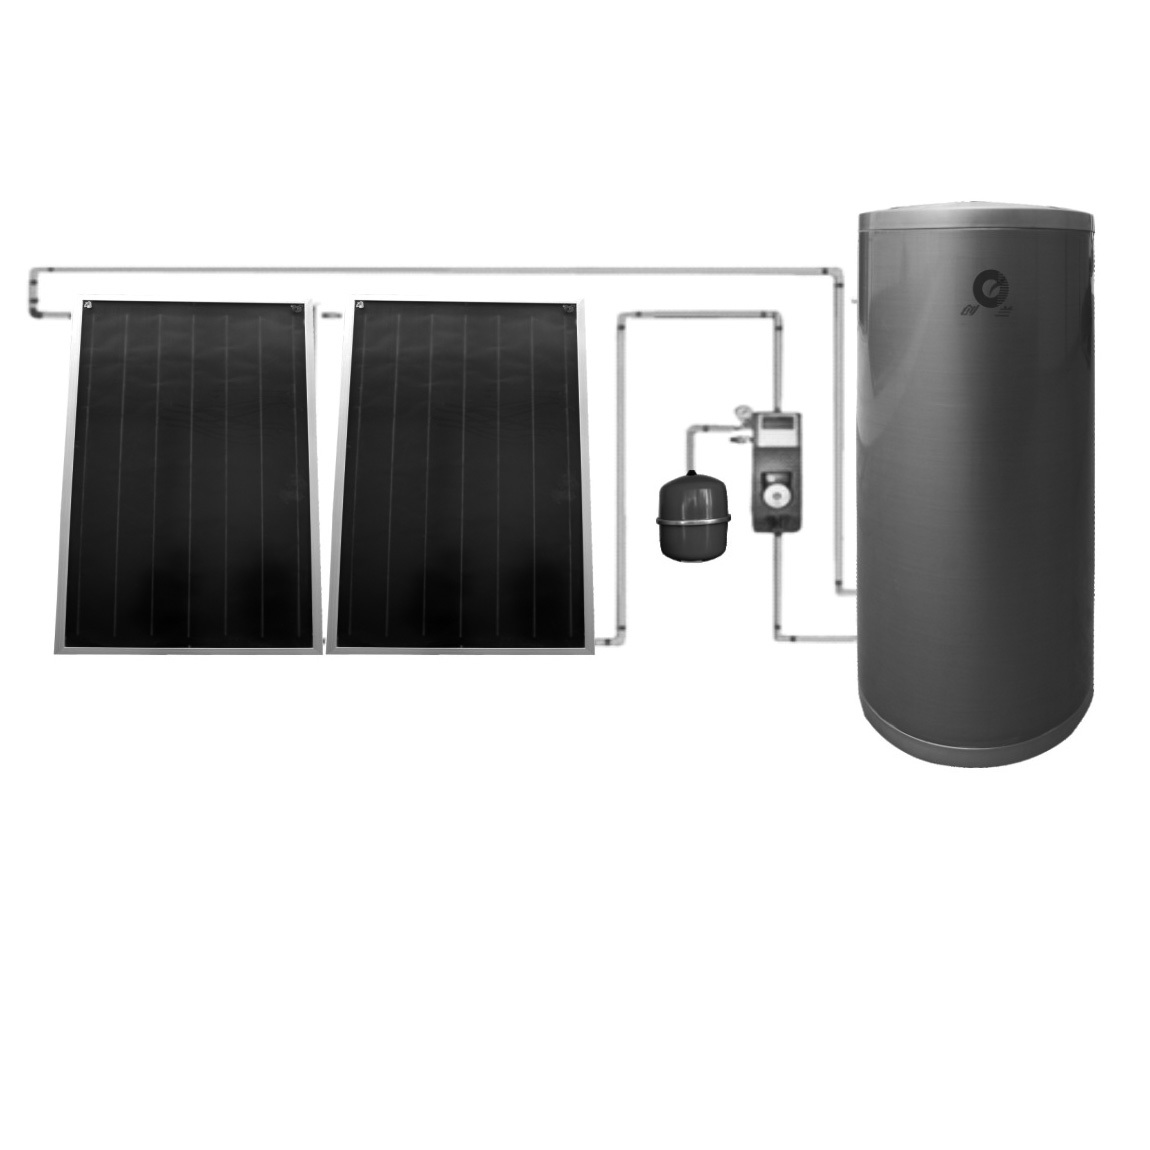 Split Type Solar Water Heater